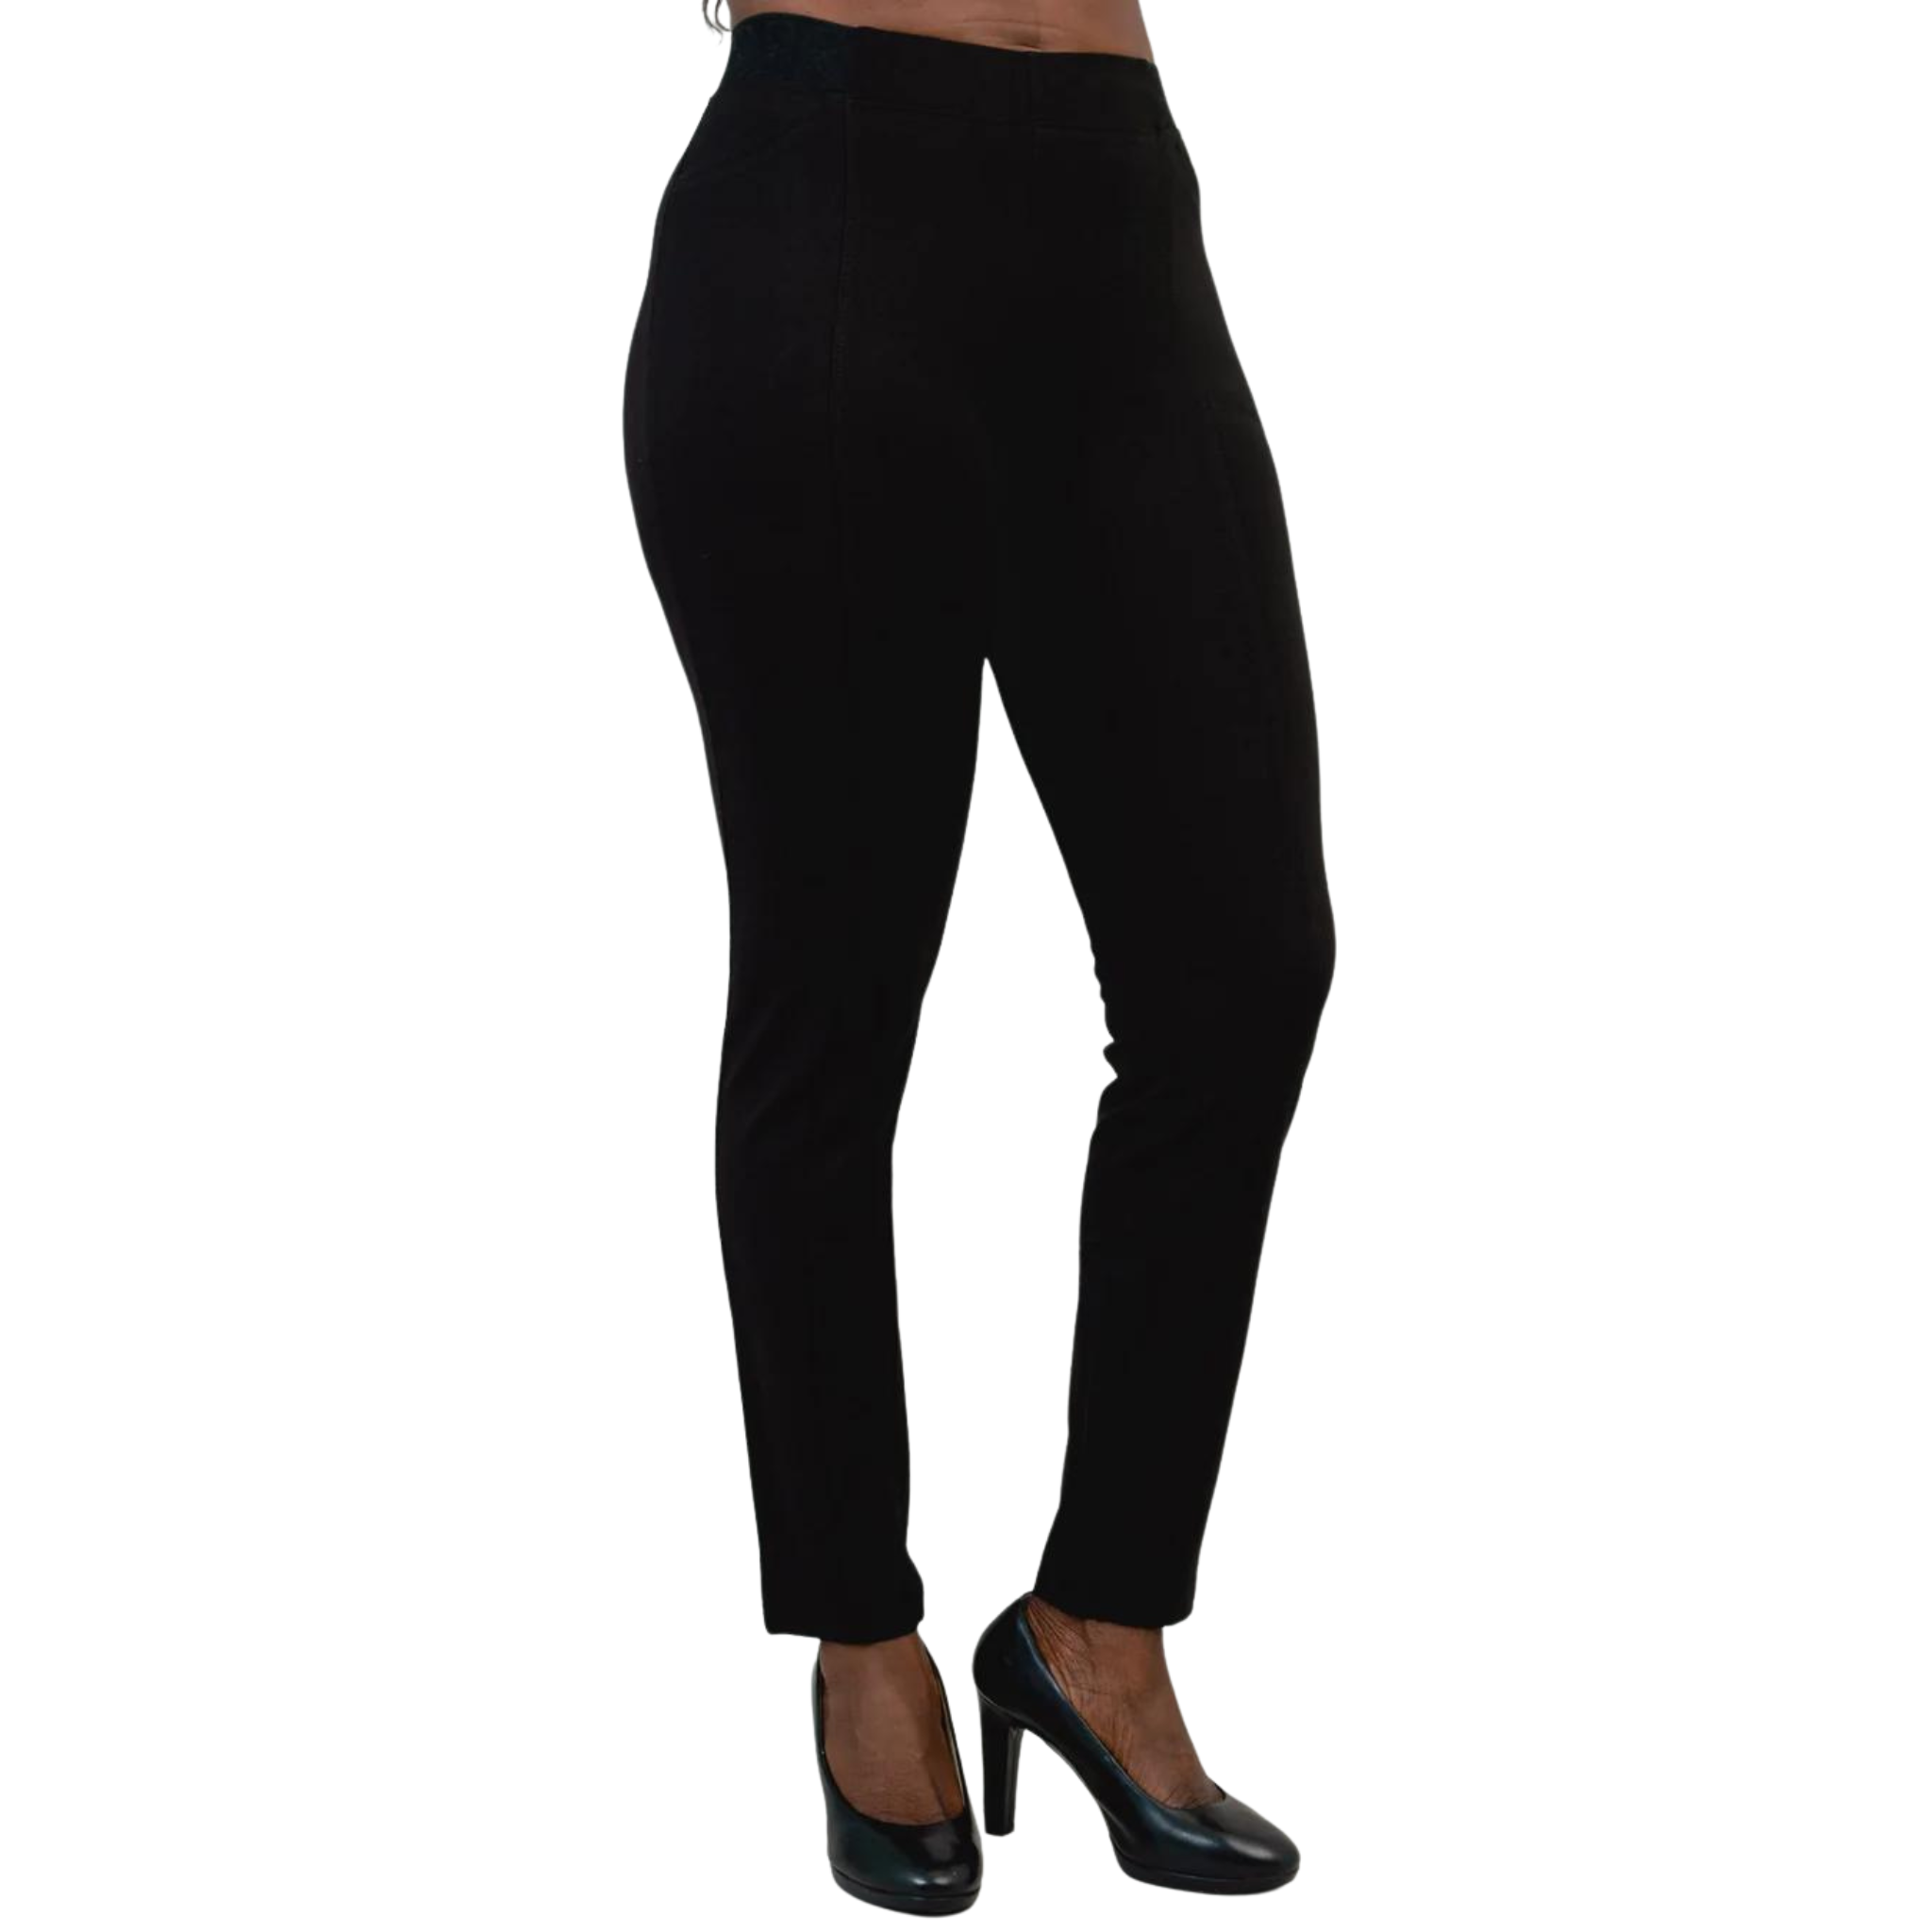 Jasmine RUE PARIS women's black cotton leggings - Legeez